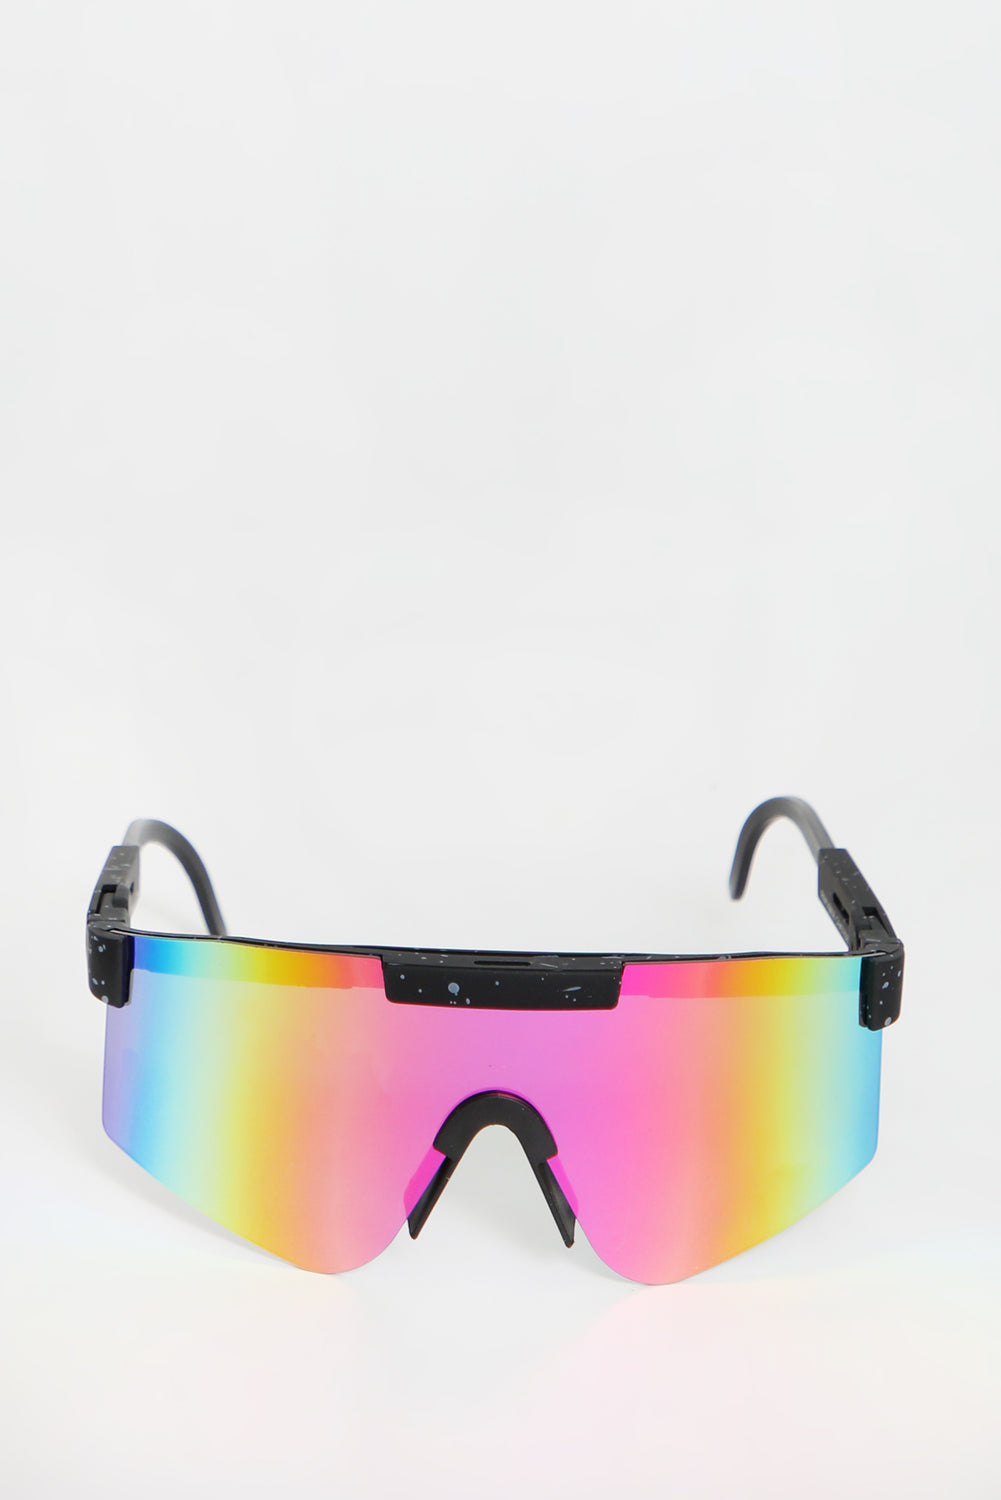 West49 Black Splatter Shield Sunglasses West49 Black Splatter Shield Sunglasses